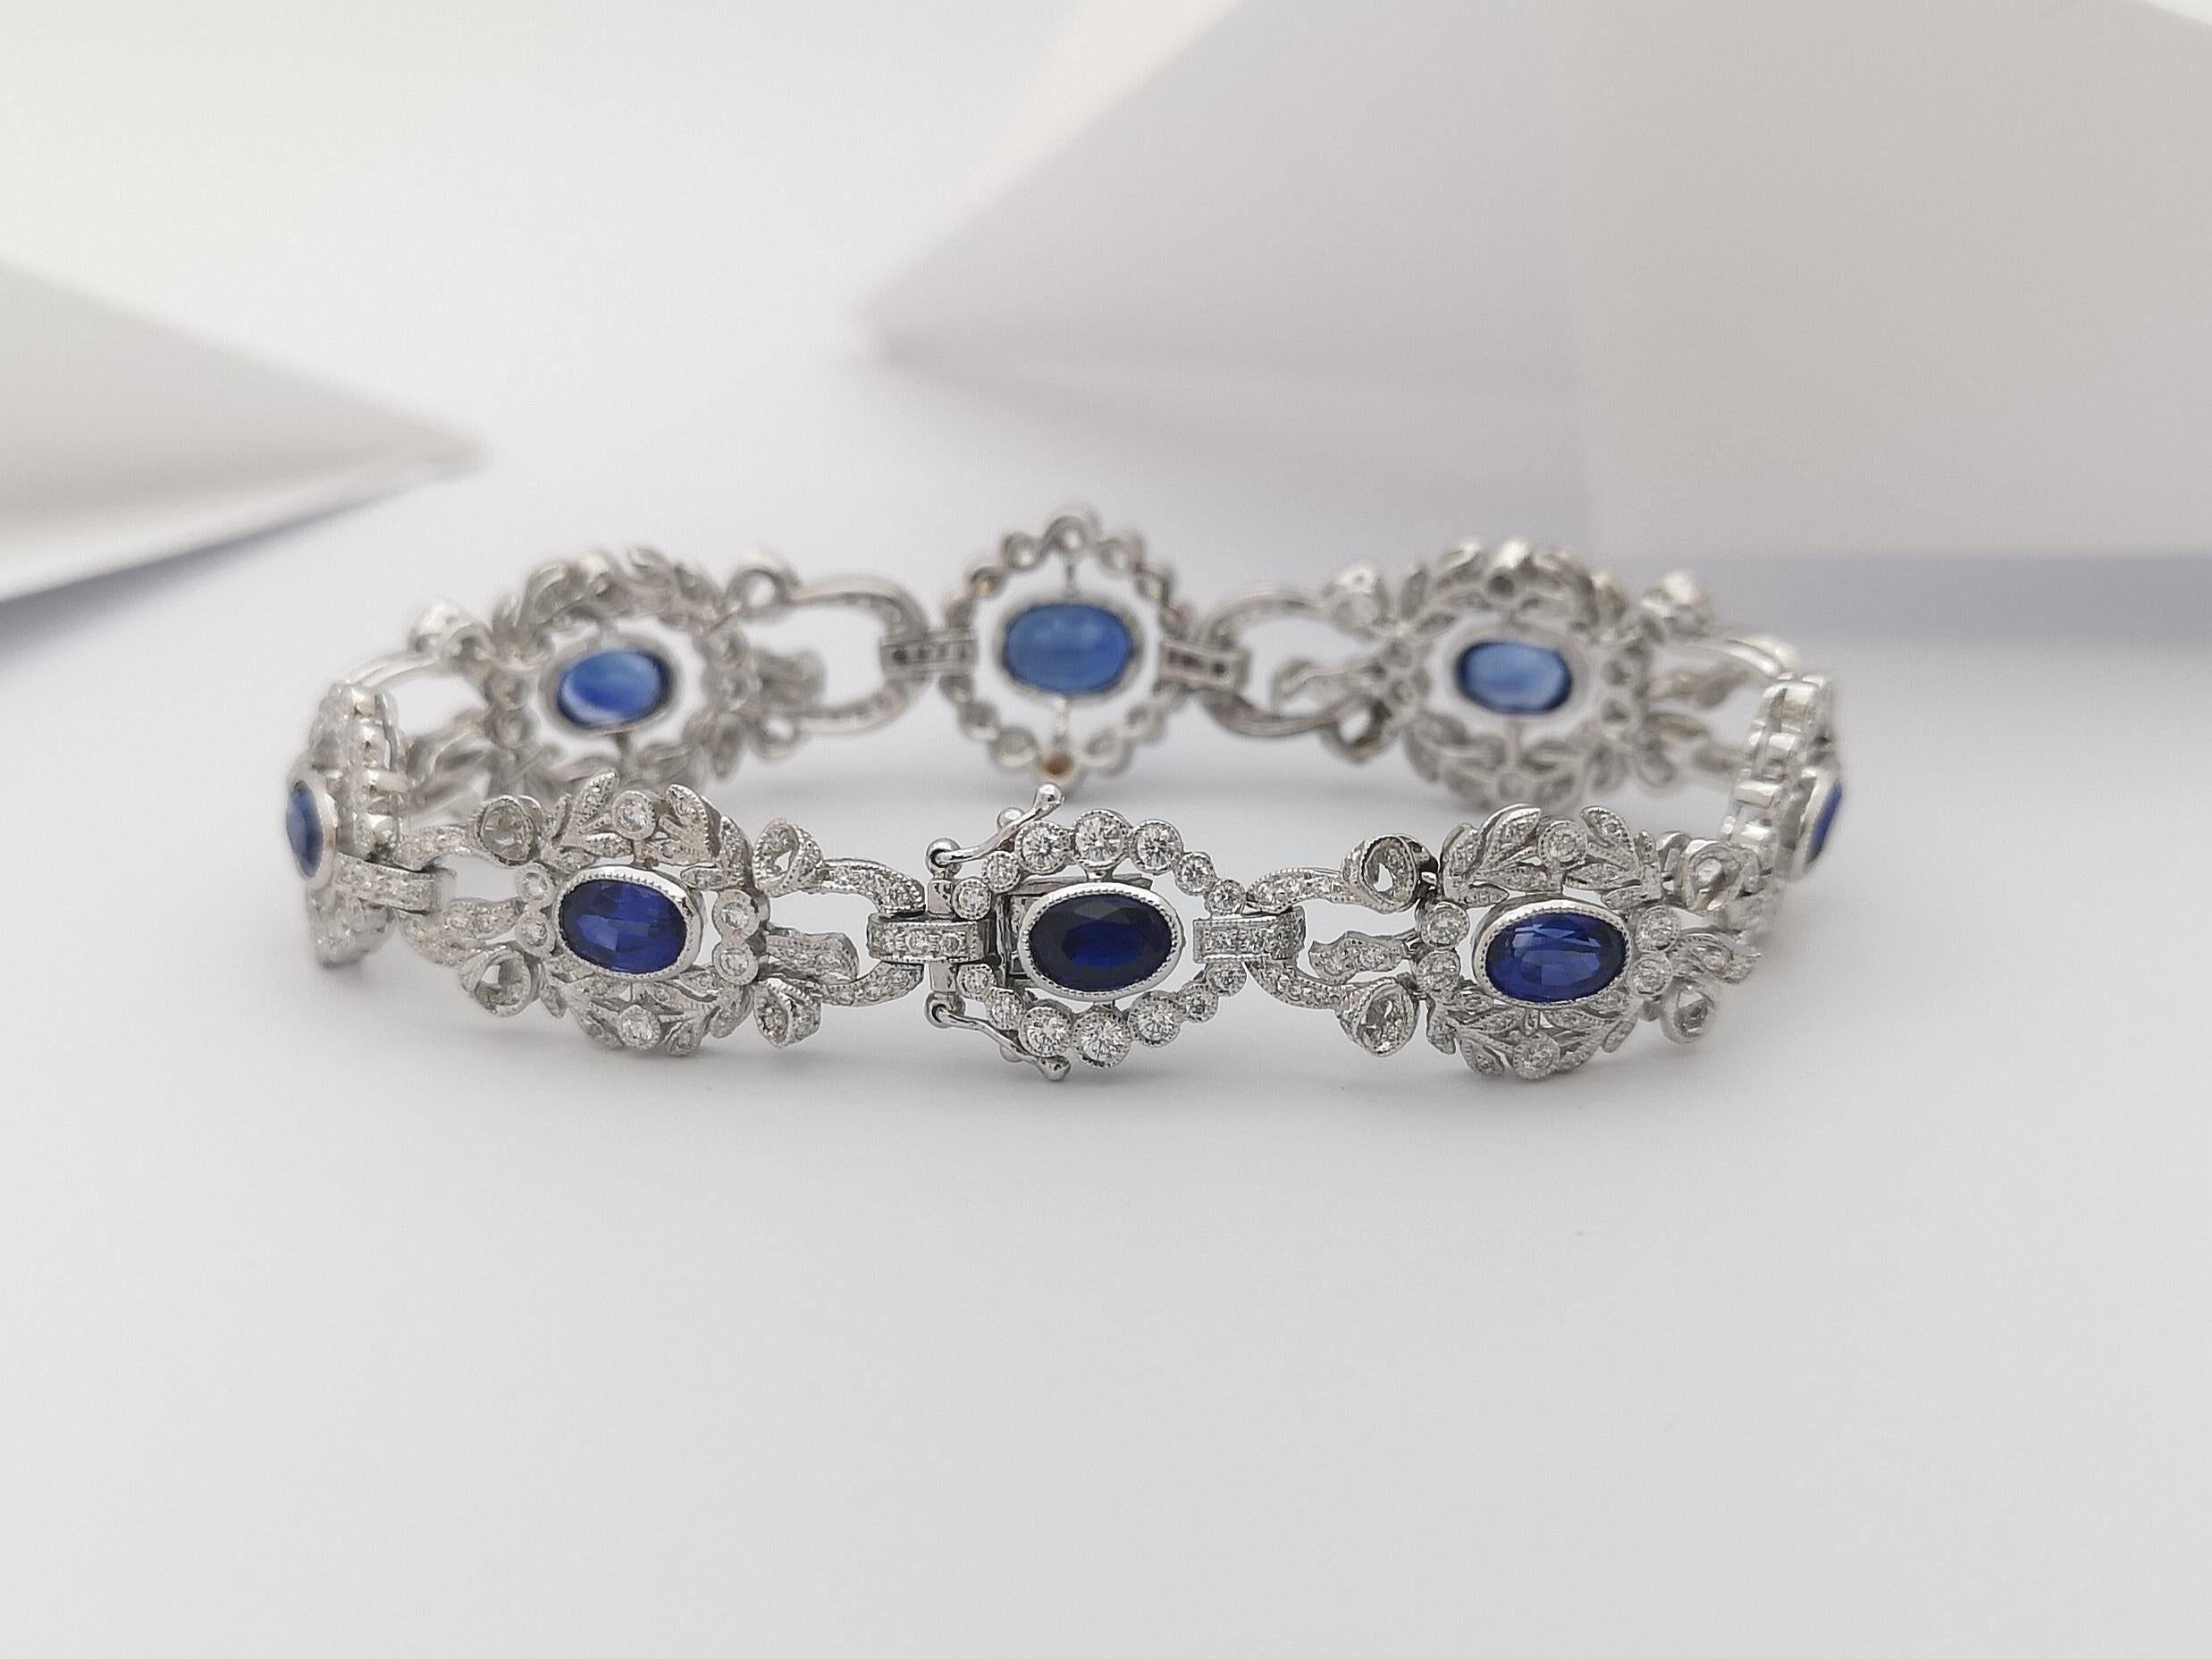  Blue Sapphire with Diamond Bracelet set in 18 Karat White Gold Settings For Sale 5